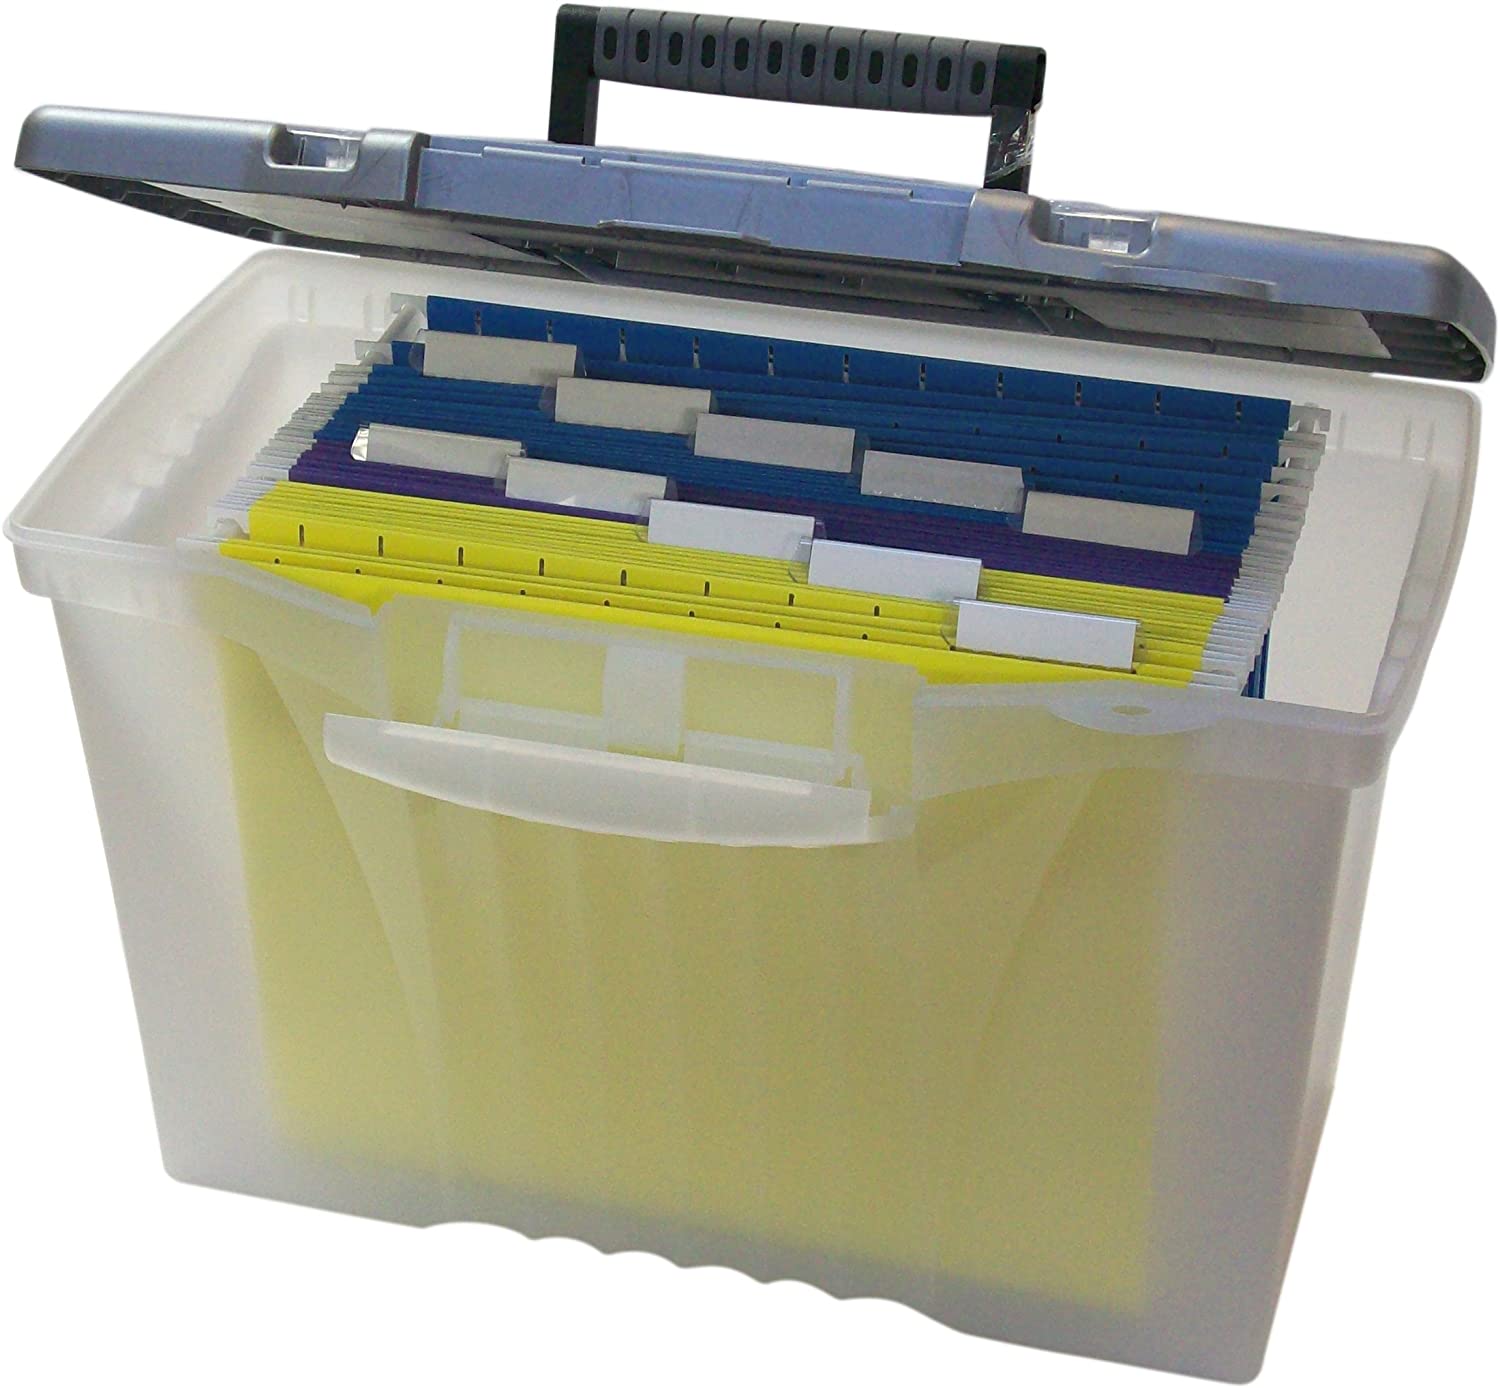 Storex Portable File Organizer Box with Lid